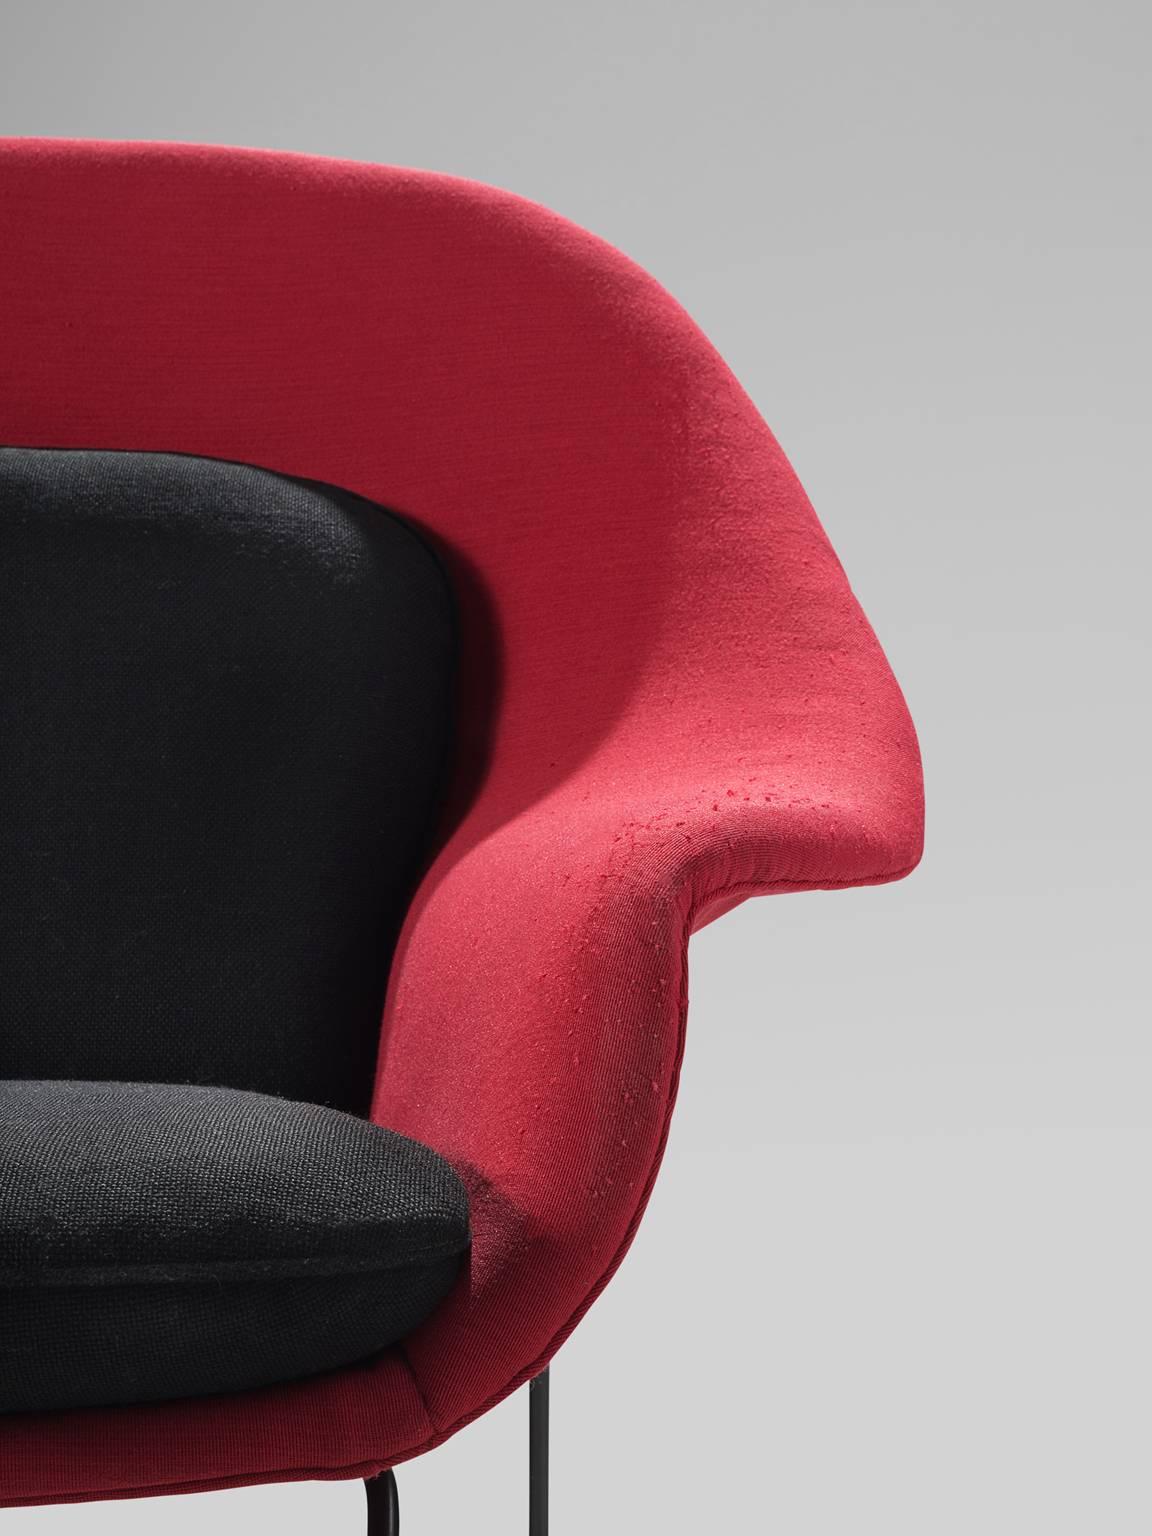 Womb Chairs by Eero Saarinen for Knoll 1